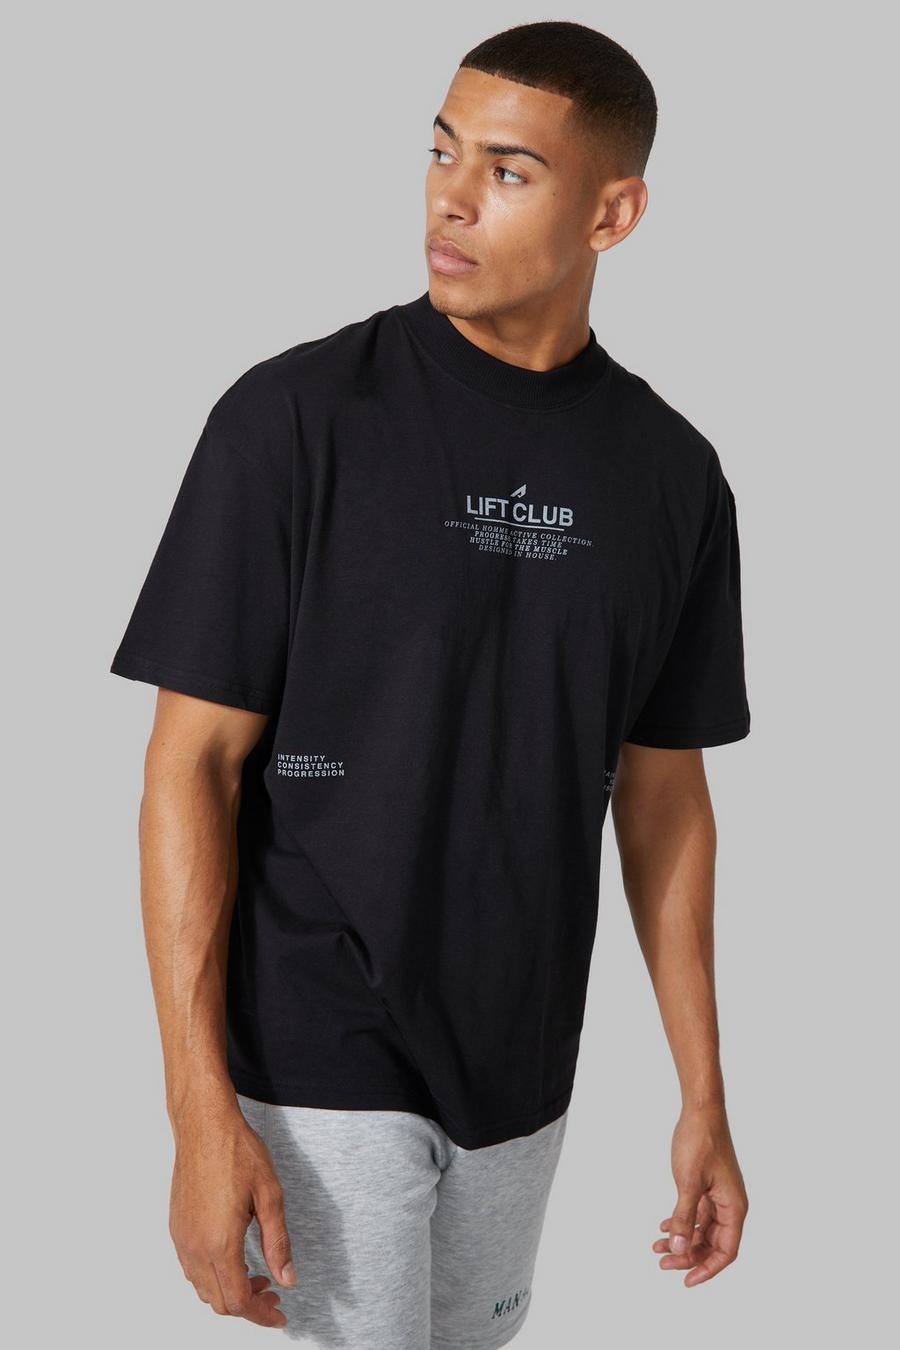 Oversize T-Shirt mit Active Lift Club Text-Print, Black